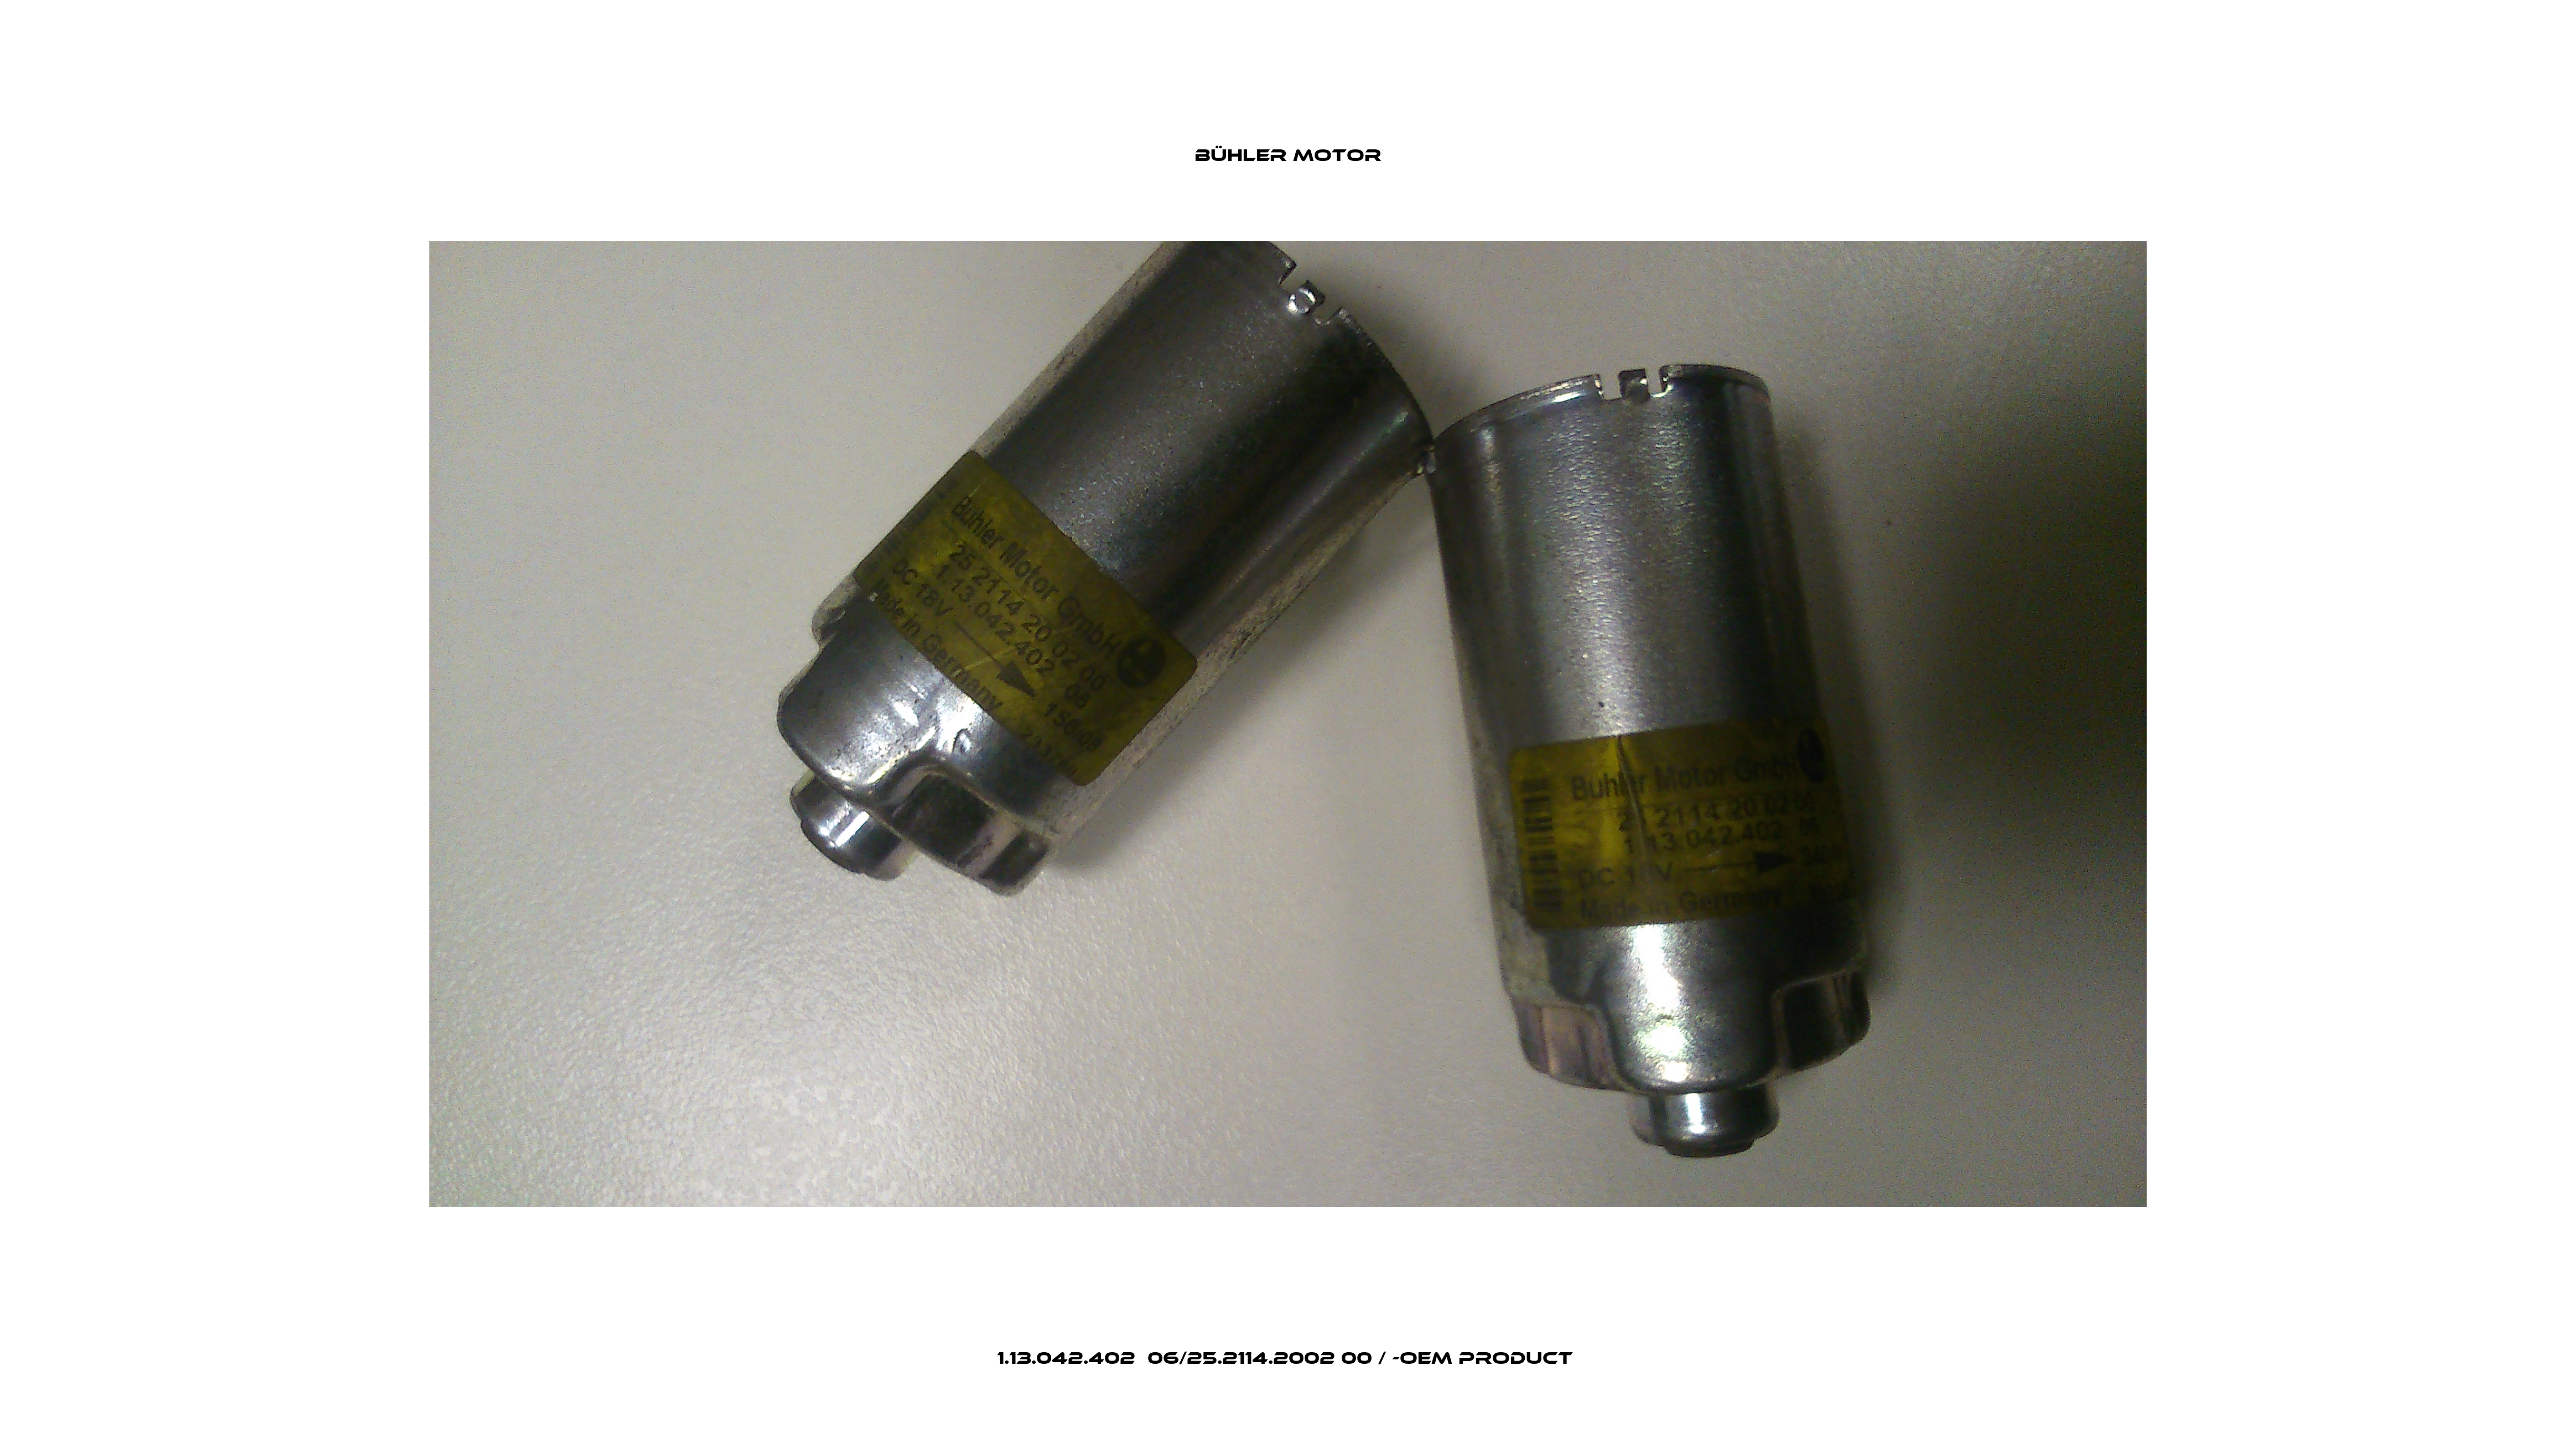 1.13.042.402  06/25.2114.2002 00 / -OEM product  Bühler Motor